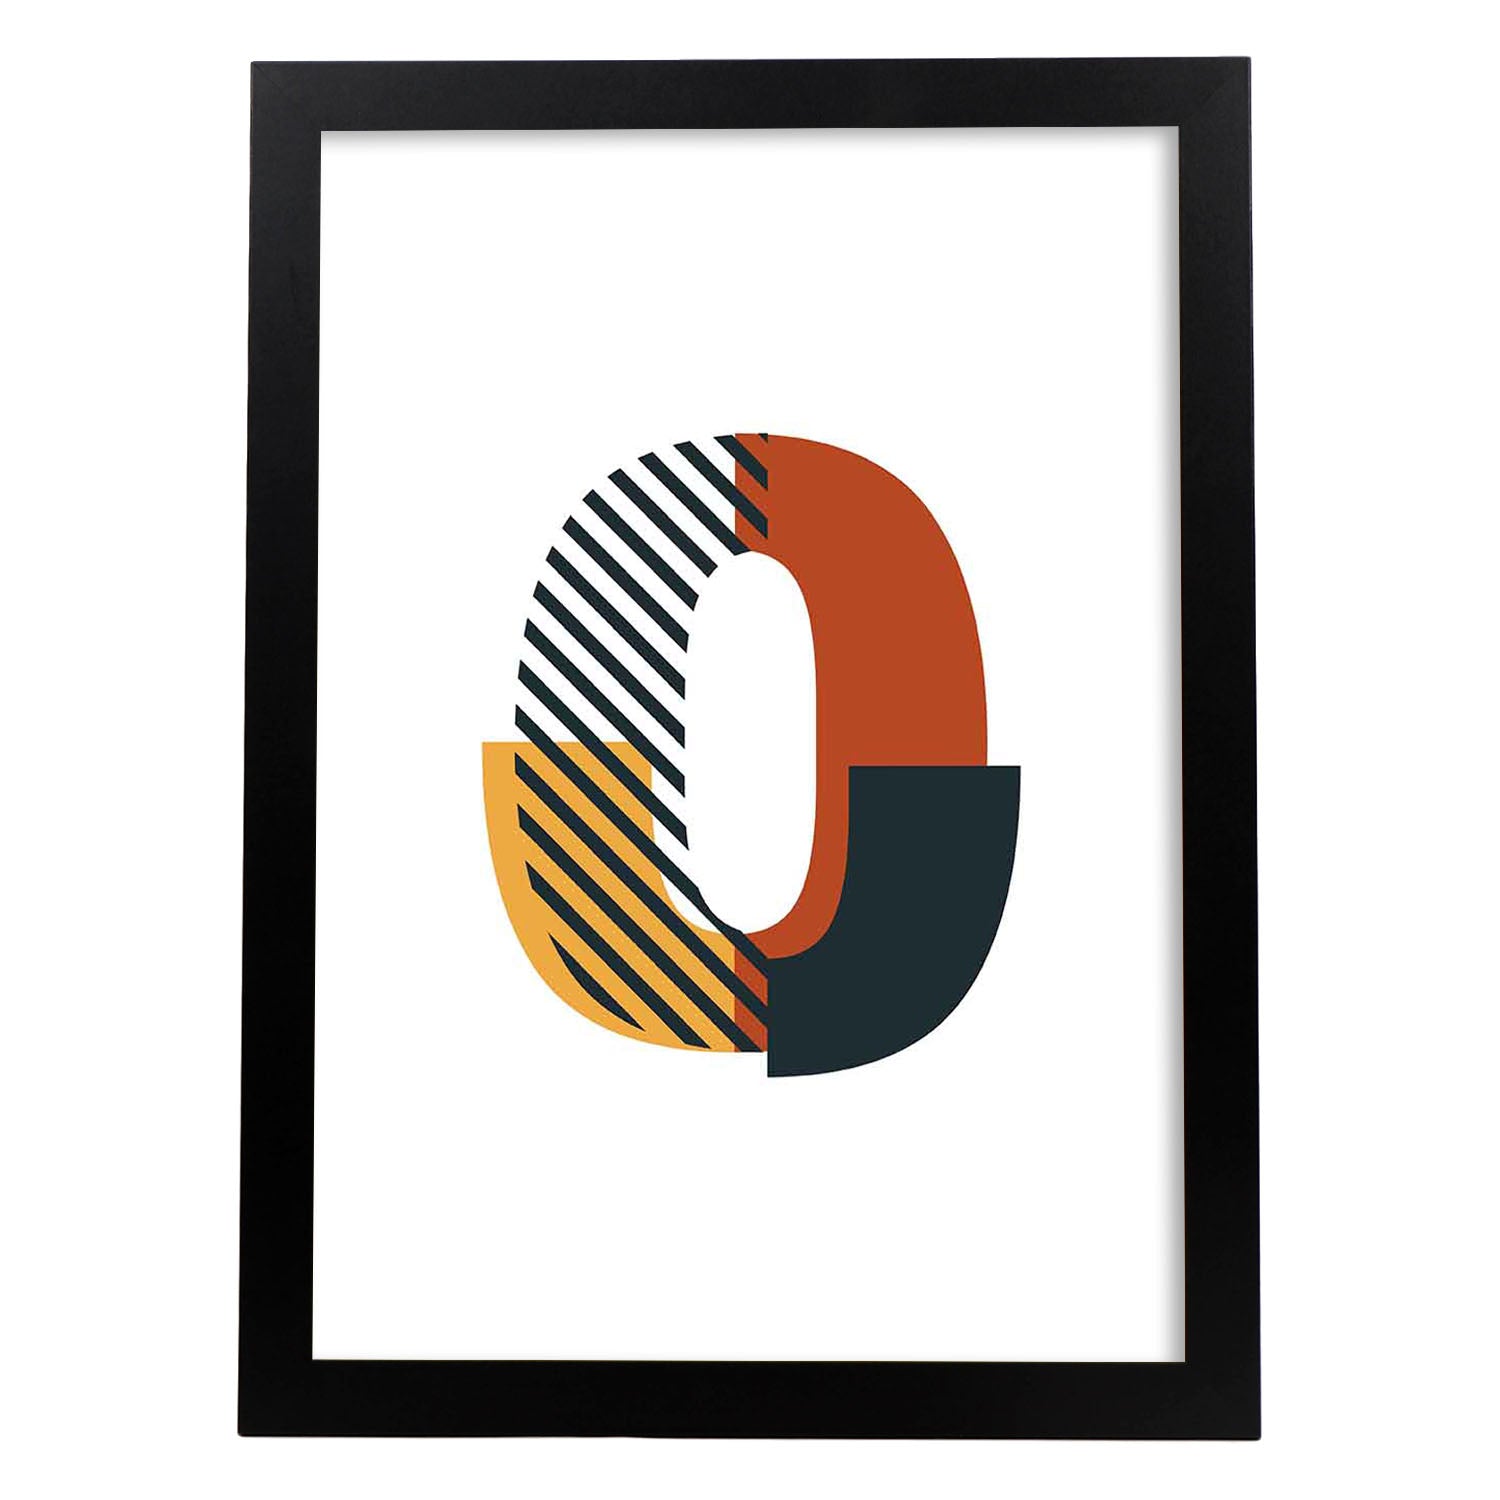 Poster de número 0. Lámina estilo Geometria con imágenes del alfabeto.-Artwork-Nacnic-A3-Marco Negro-Nacnic Estudio SL